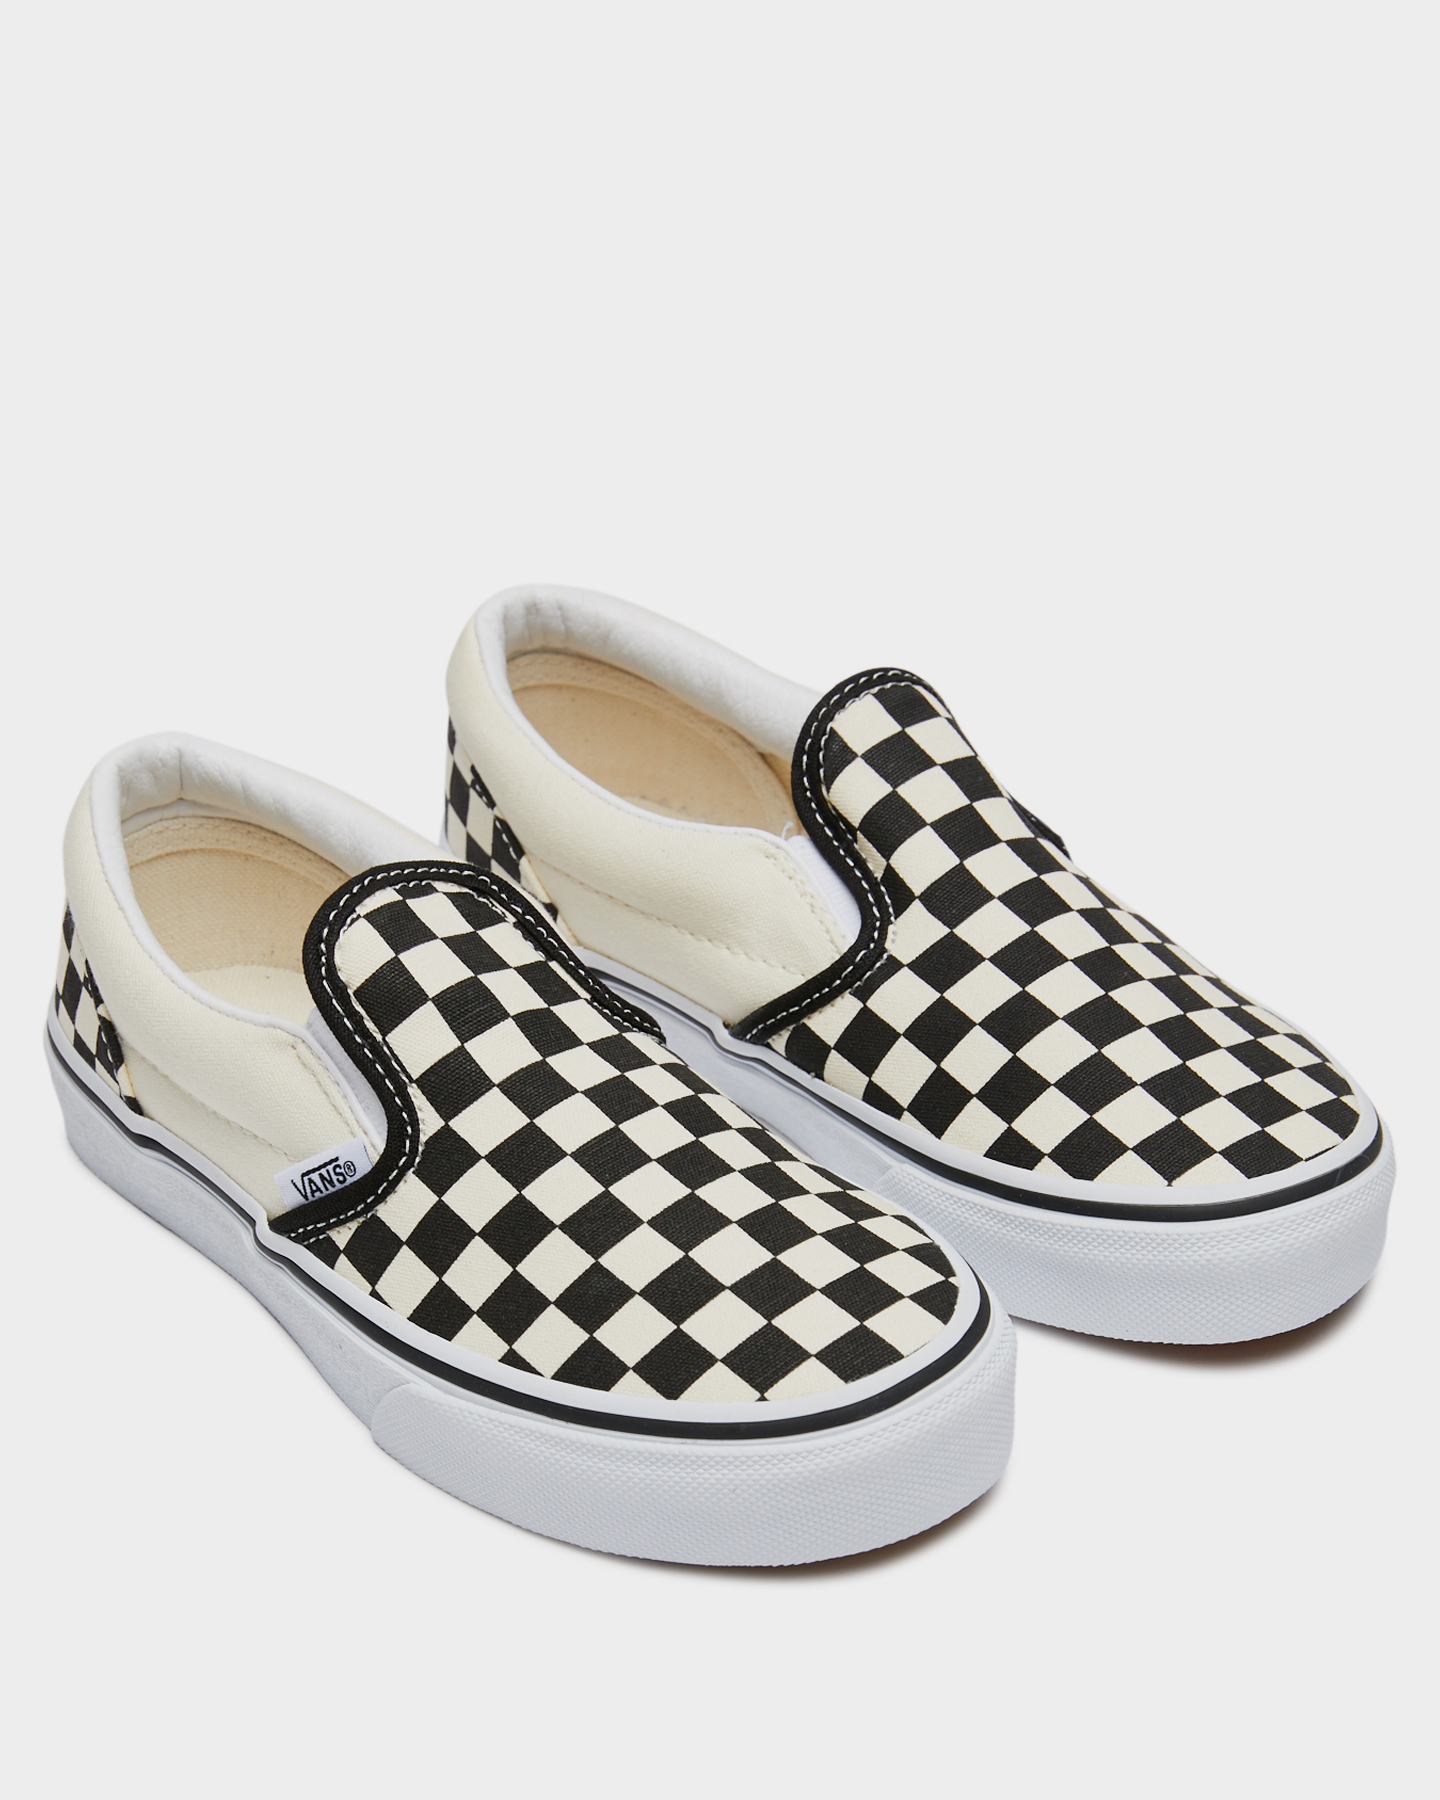 Vans Kids Classic Slip-On Checkerboard - Black White Check | SurfStitch